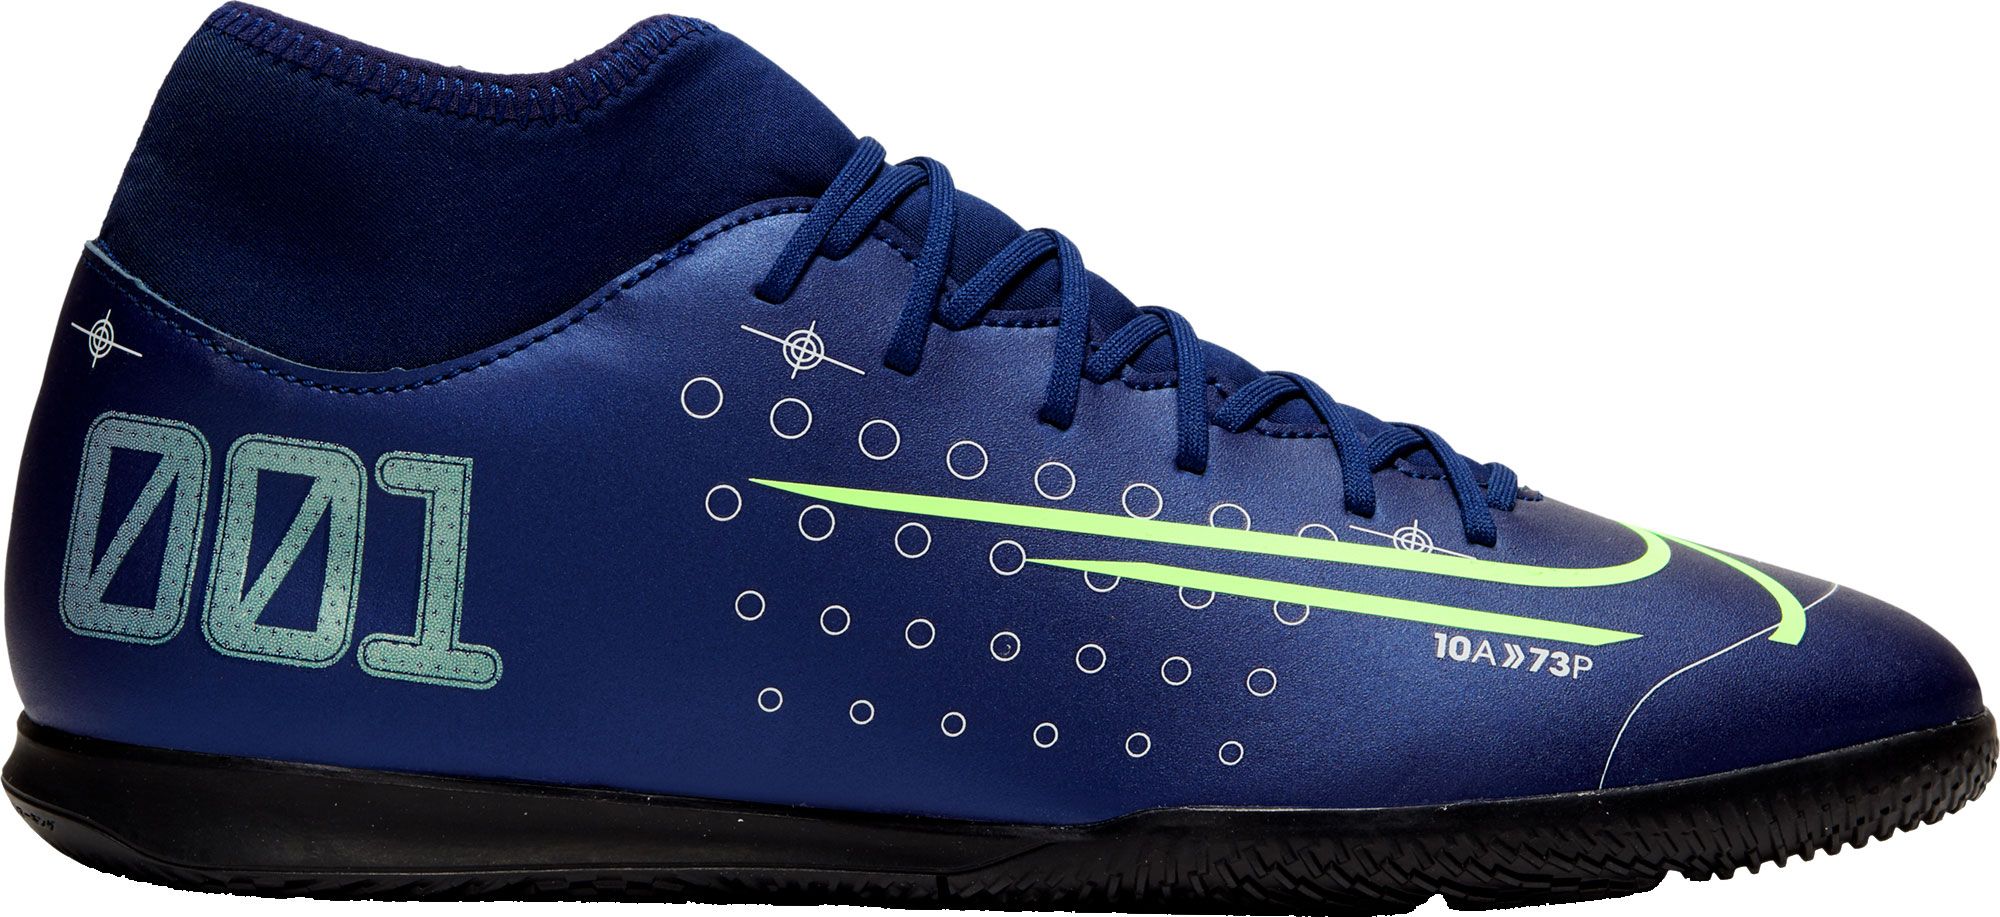 Nike SUPERFLY 6 CLUB TF Futbol Niños ShowSport Boots